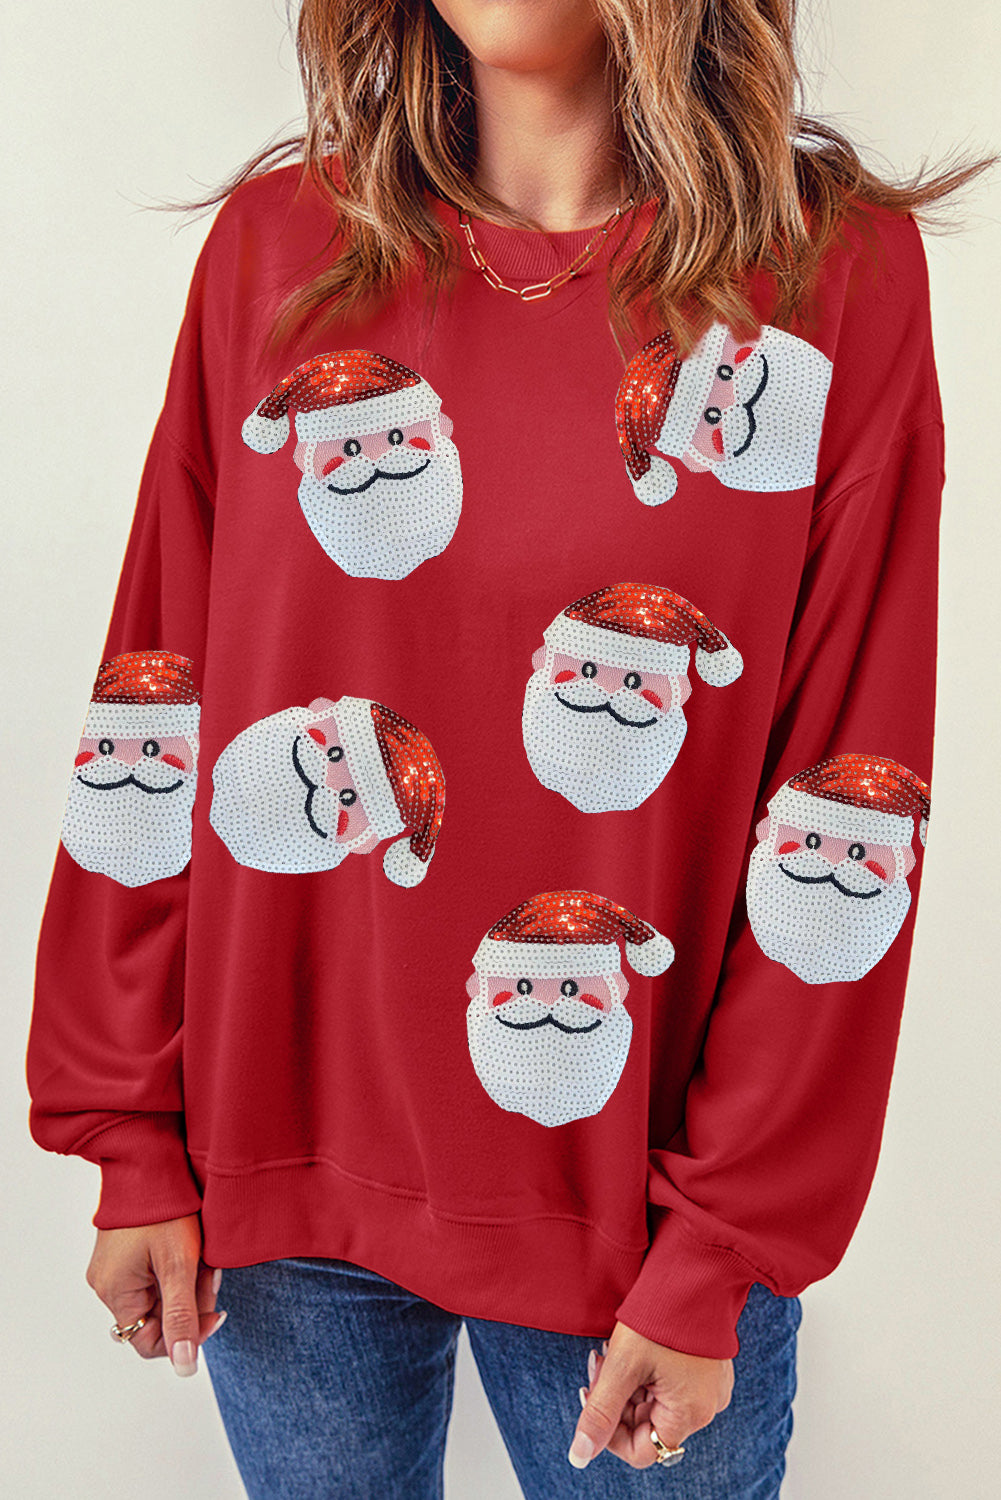 Red-2 Santa Claus Sequin Graphic Women's Christmas Sweatshirt - 2 colors - women's sweatshirts at TFC&H Co.